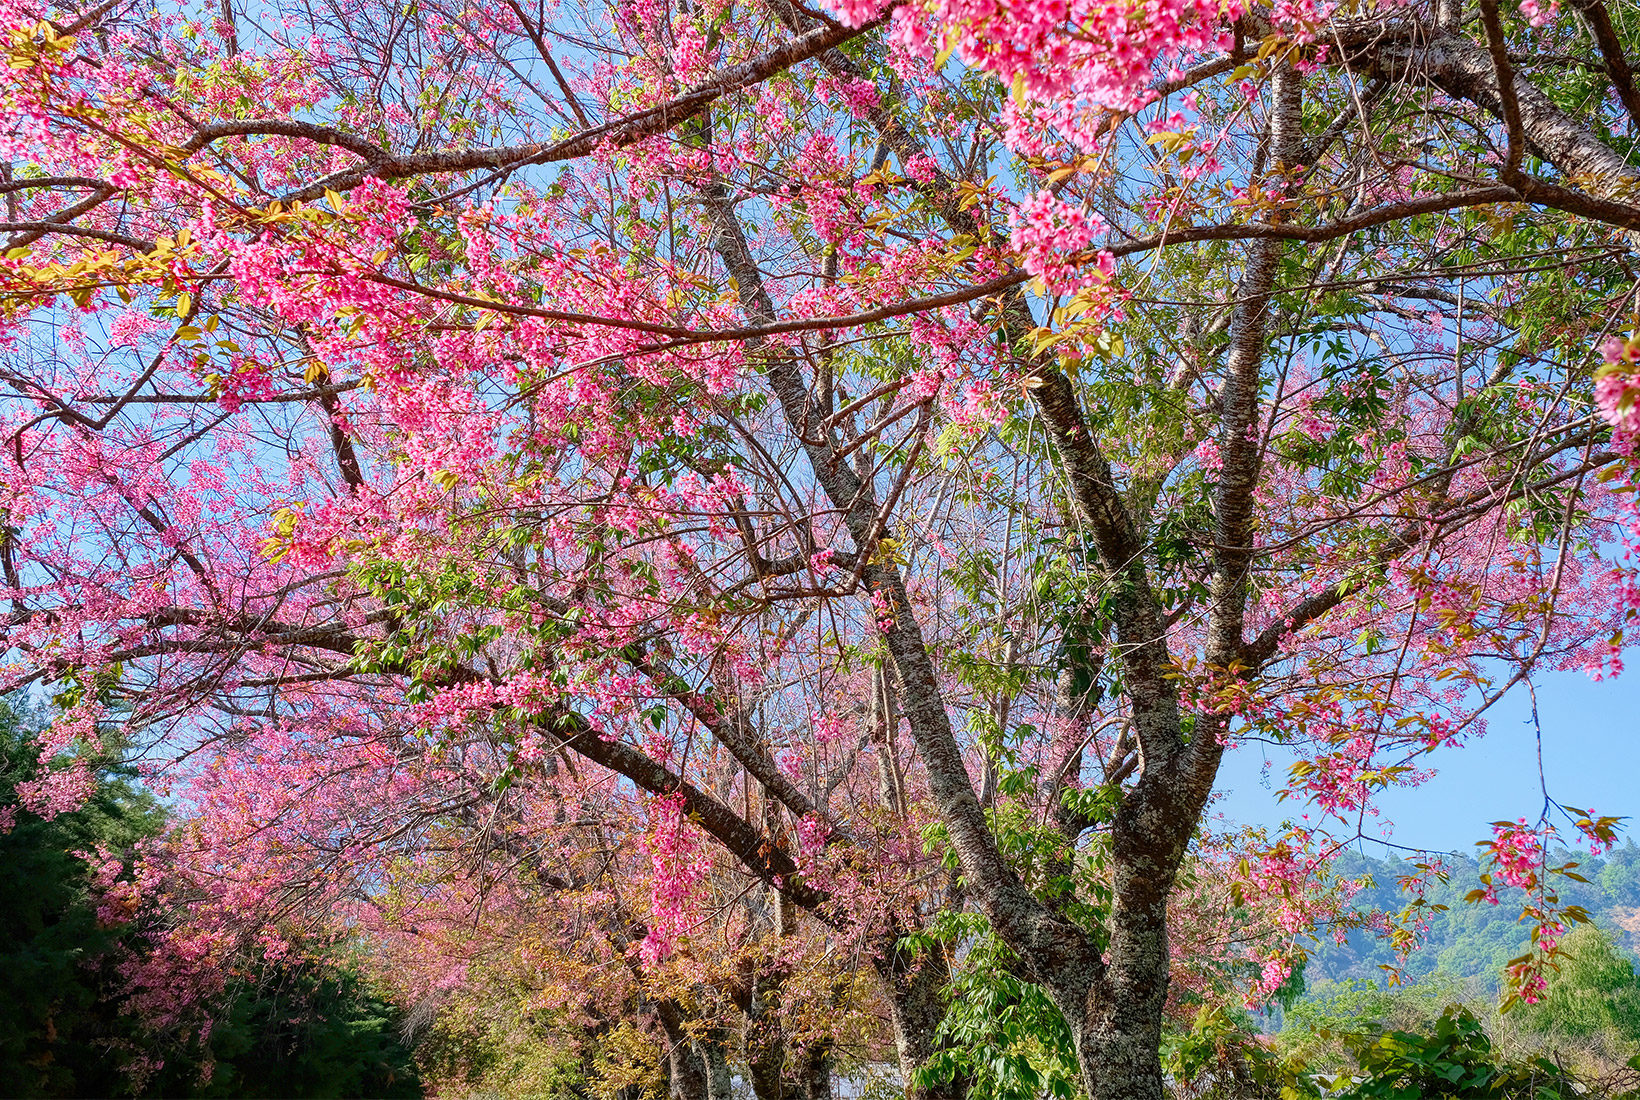 Crystal clear blue skies peek through Cherry tree blossoms